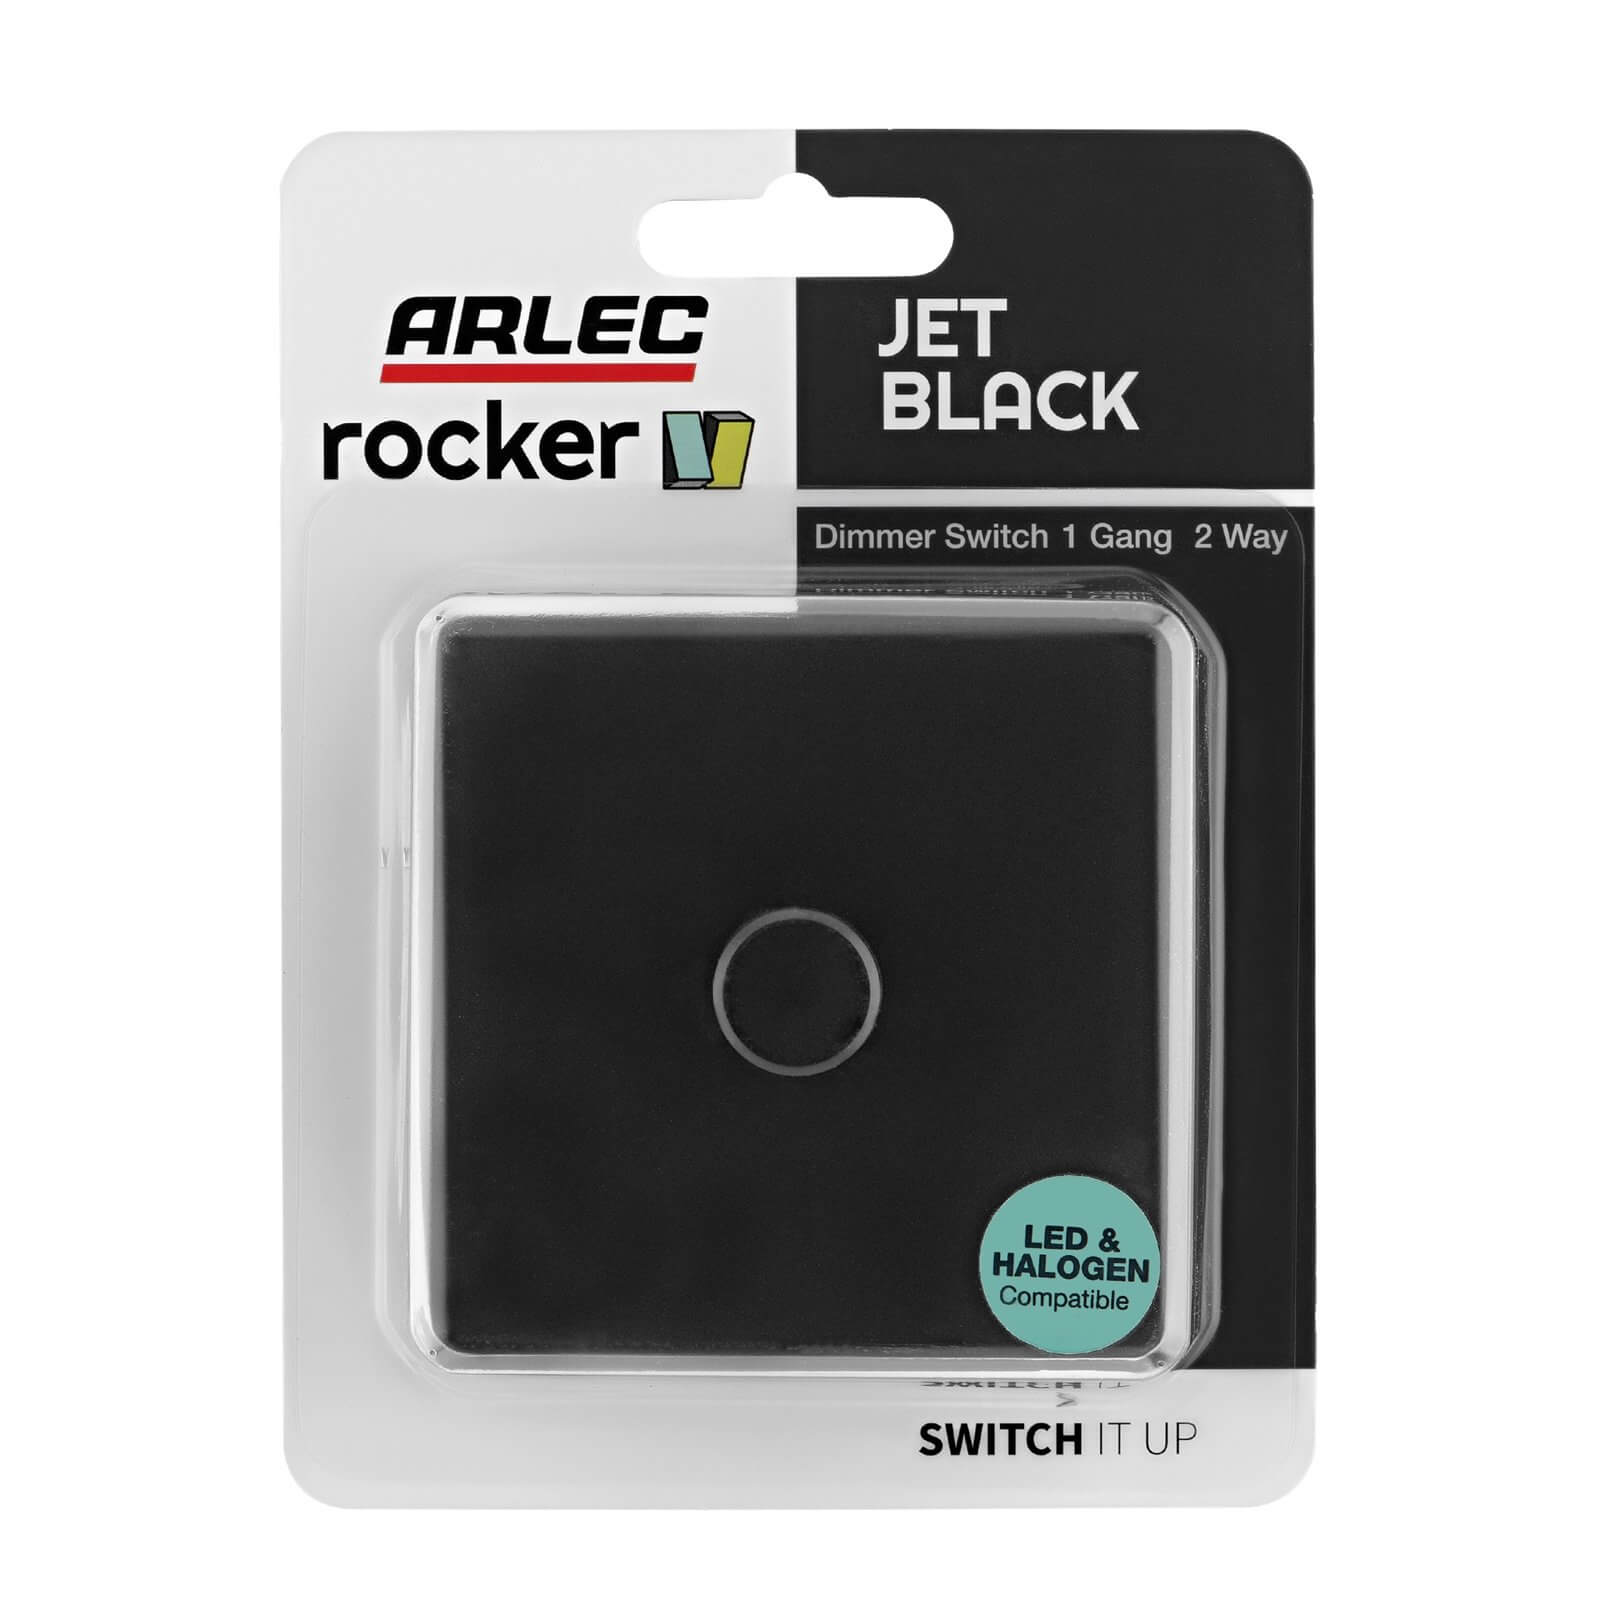 Arlec Rocker 1 Gang 2 Way Jet Black Dimmer switch